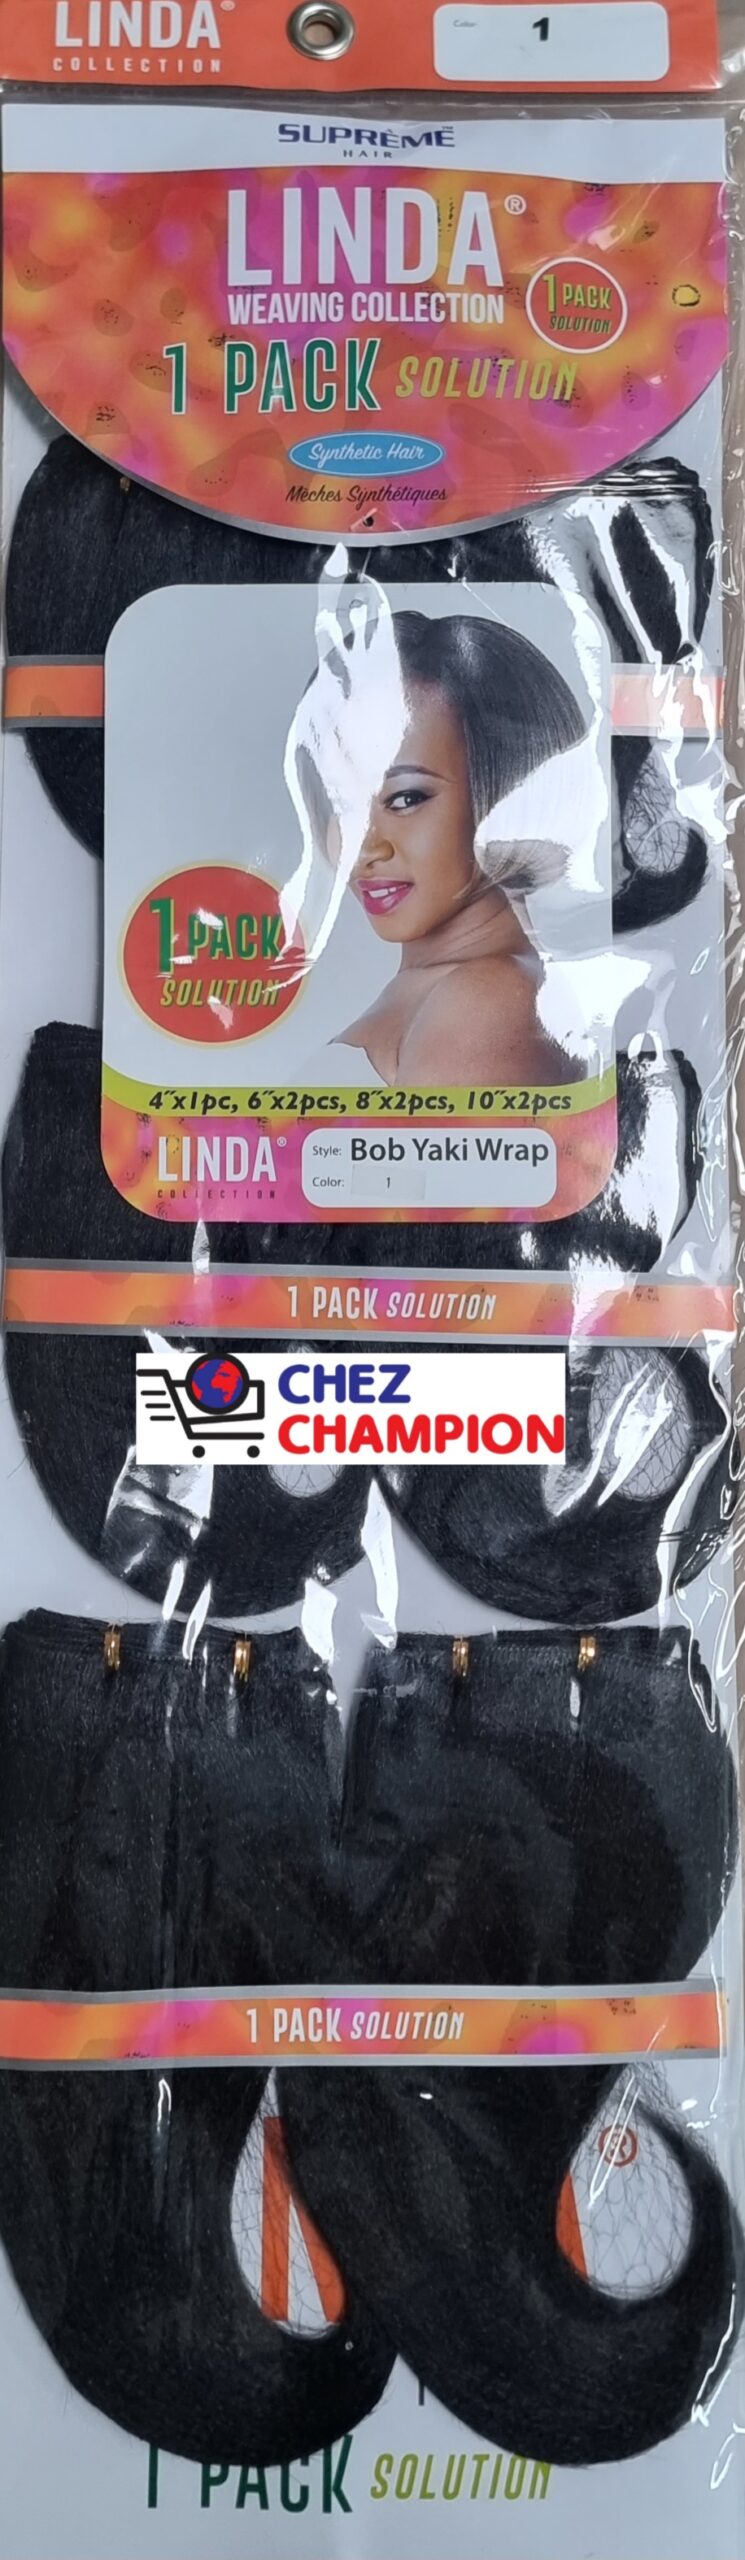 Linda weaving collection 1 pack solution bob yaki wrap – couleur 1